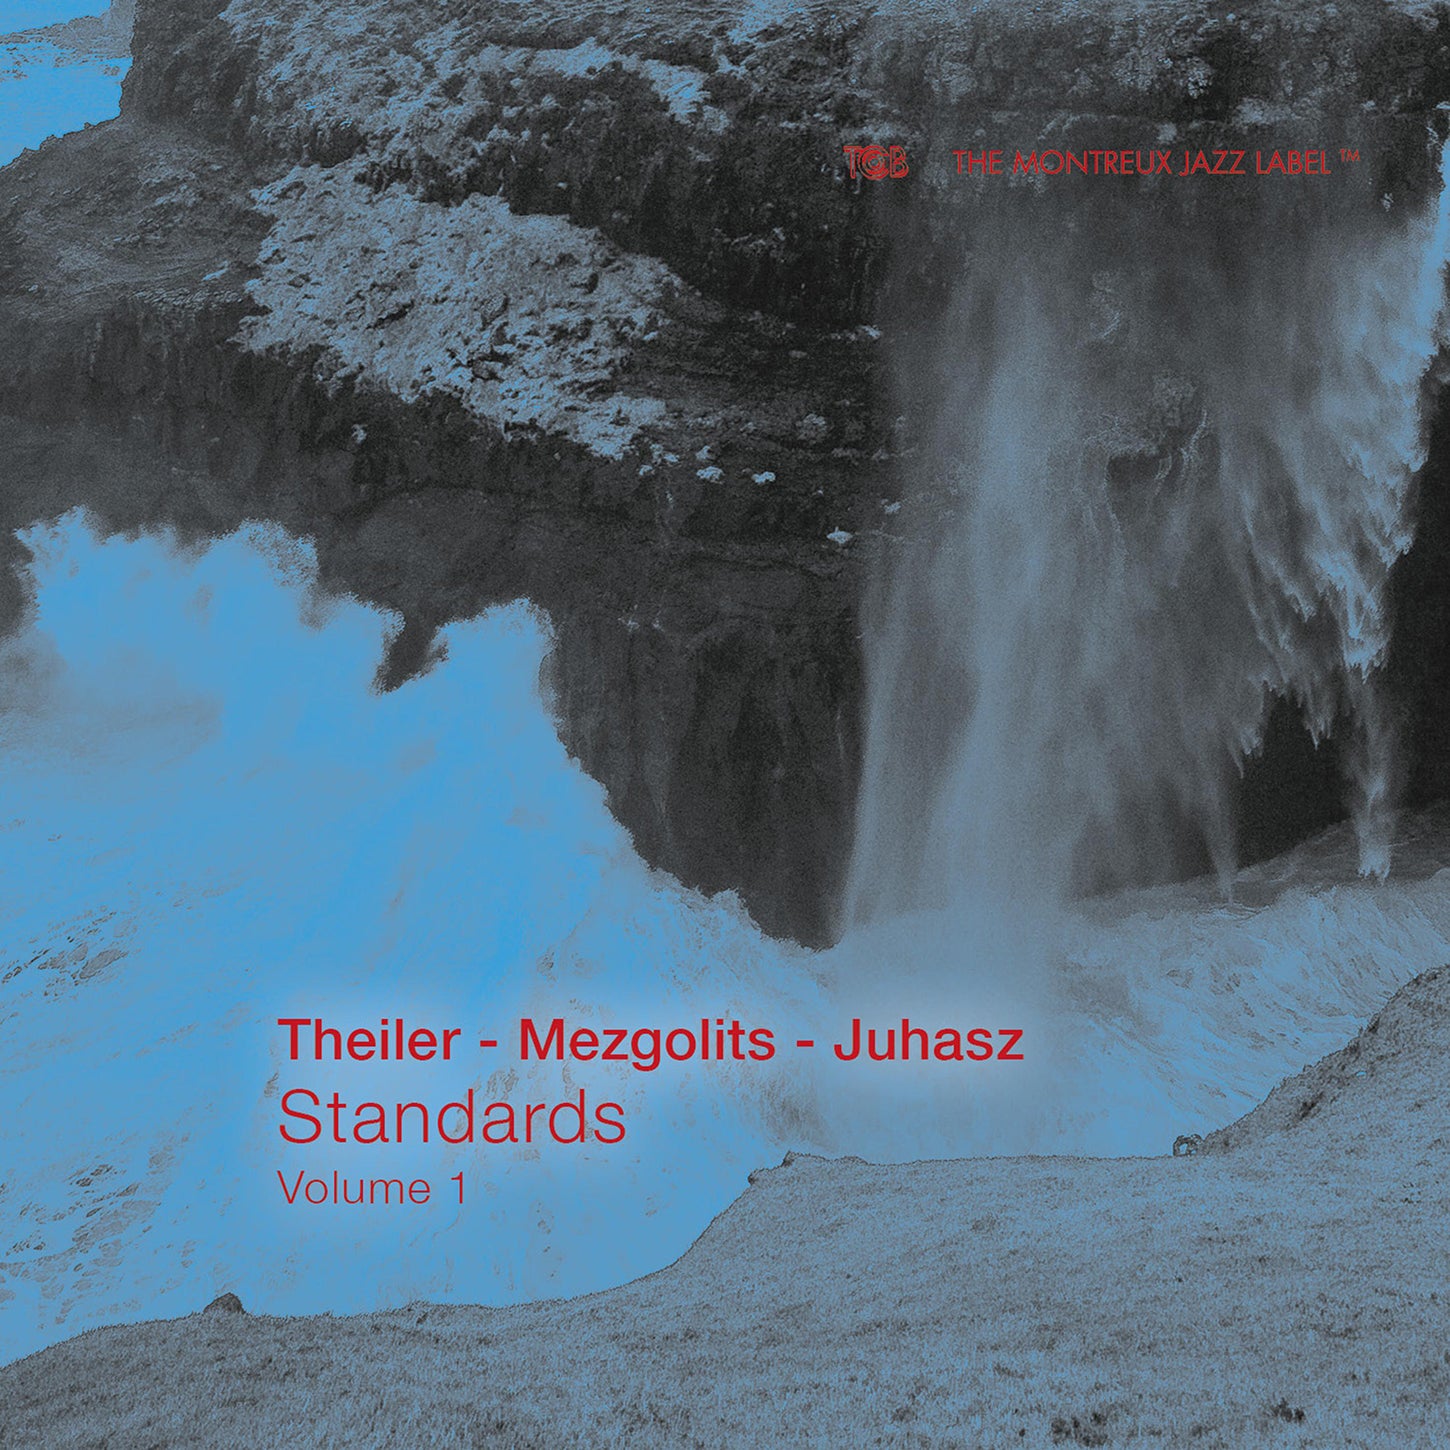 Standards, Vol. 1 / Theiler, Mezgolits, Juhasz